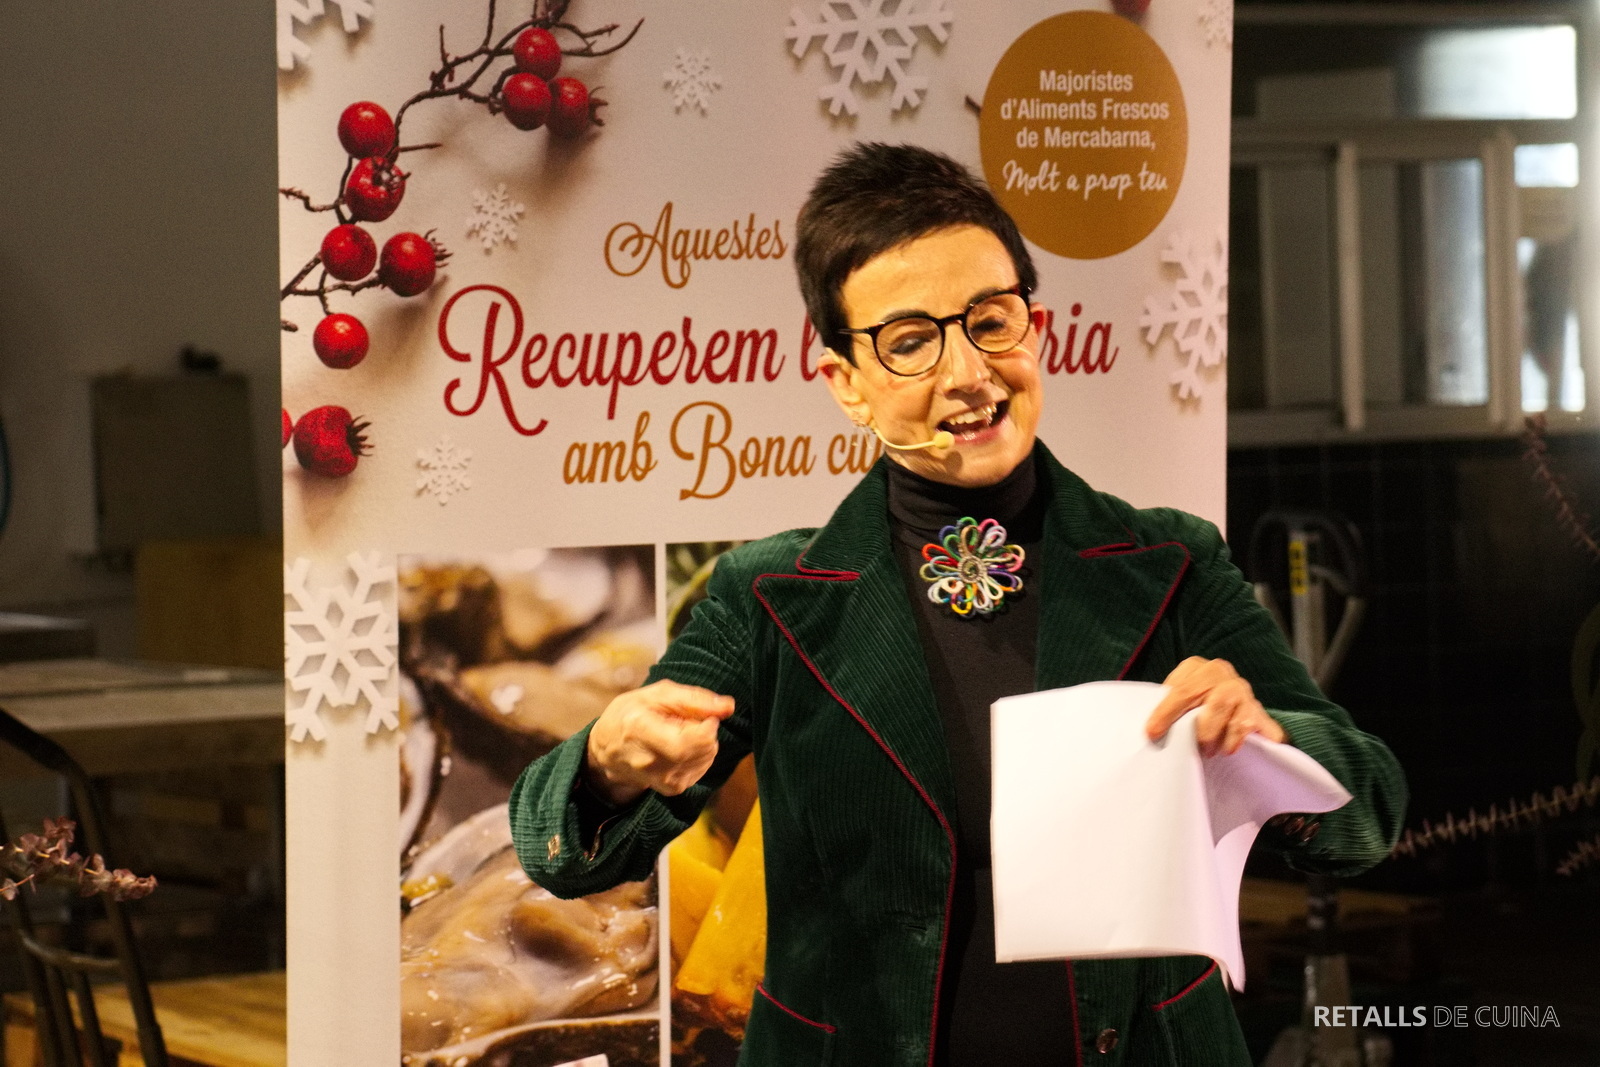 Campanya de Nadal de Mercabarna amb la xef Carme Ruscalleda